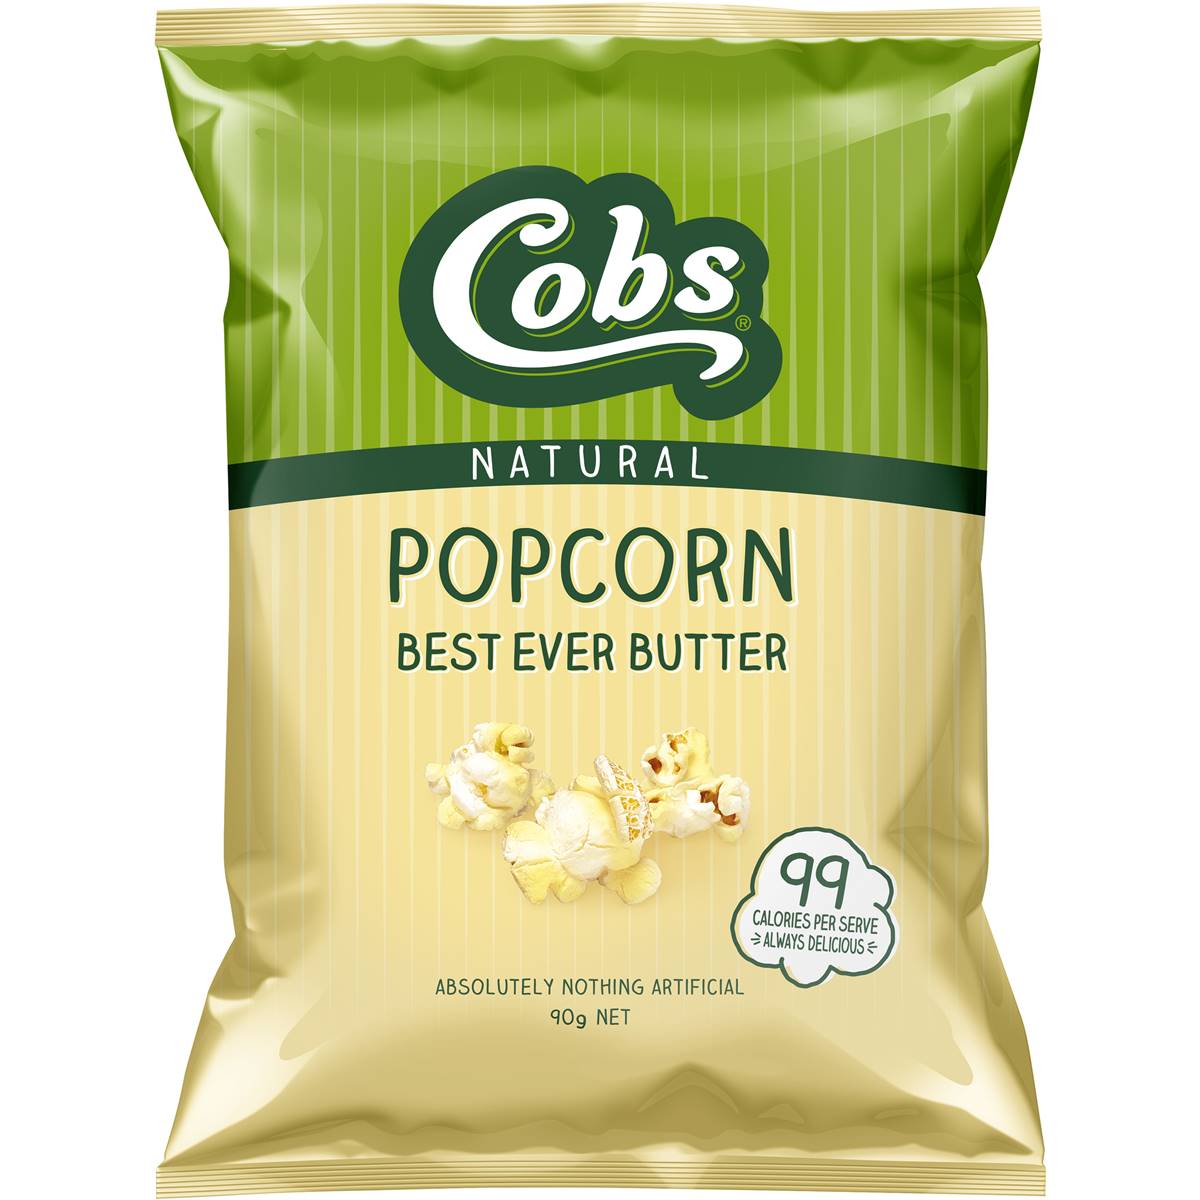 Cobs Natural Popcorn Best Ever Butter 90g